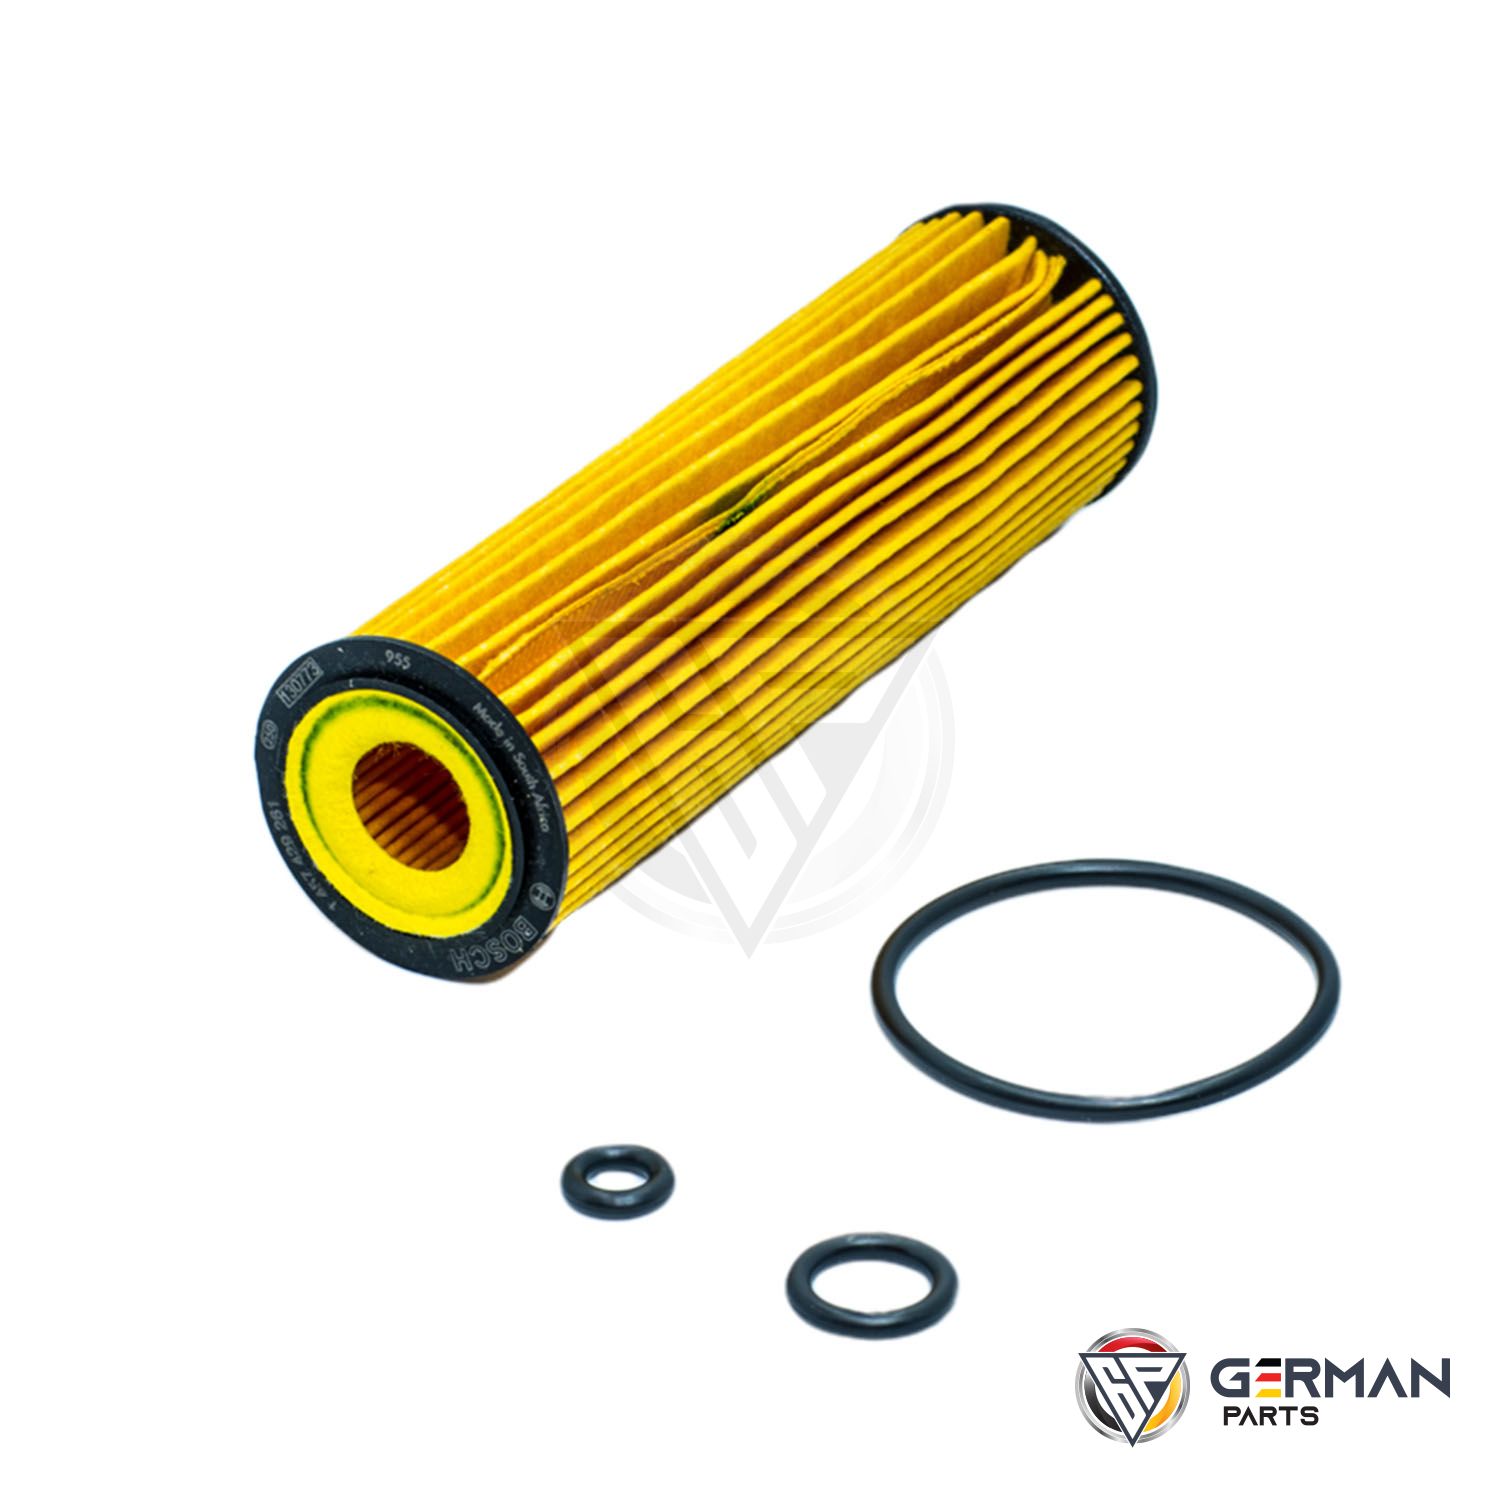 Buy Bosch Oil Filter 2711800009 - German Parts